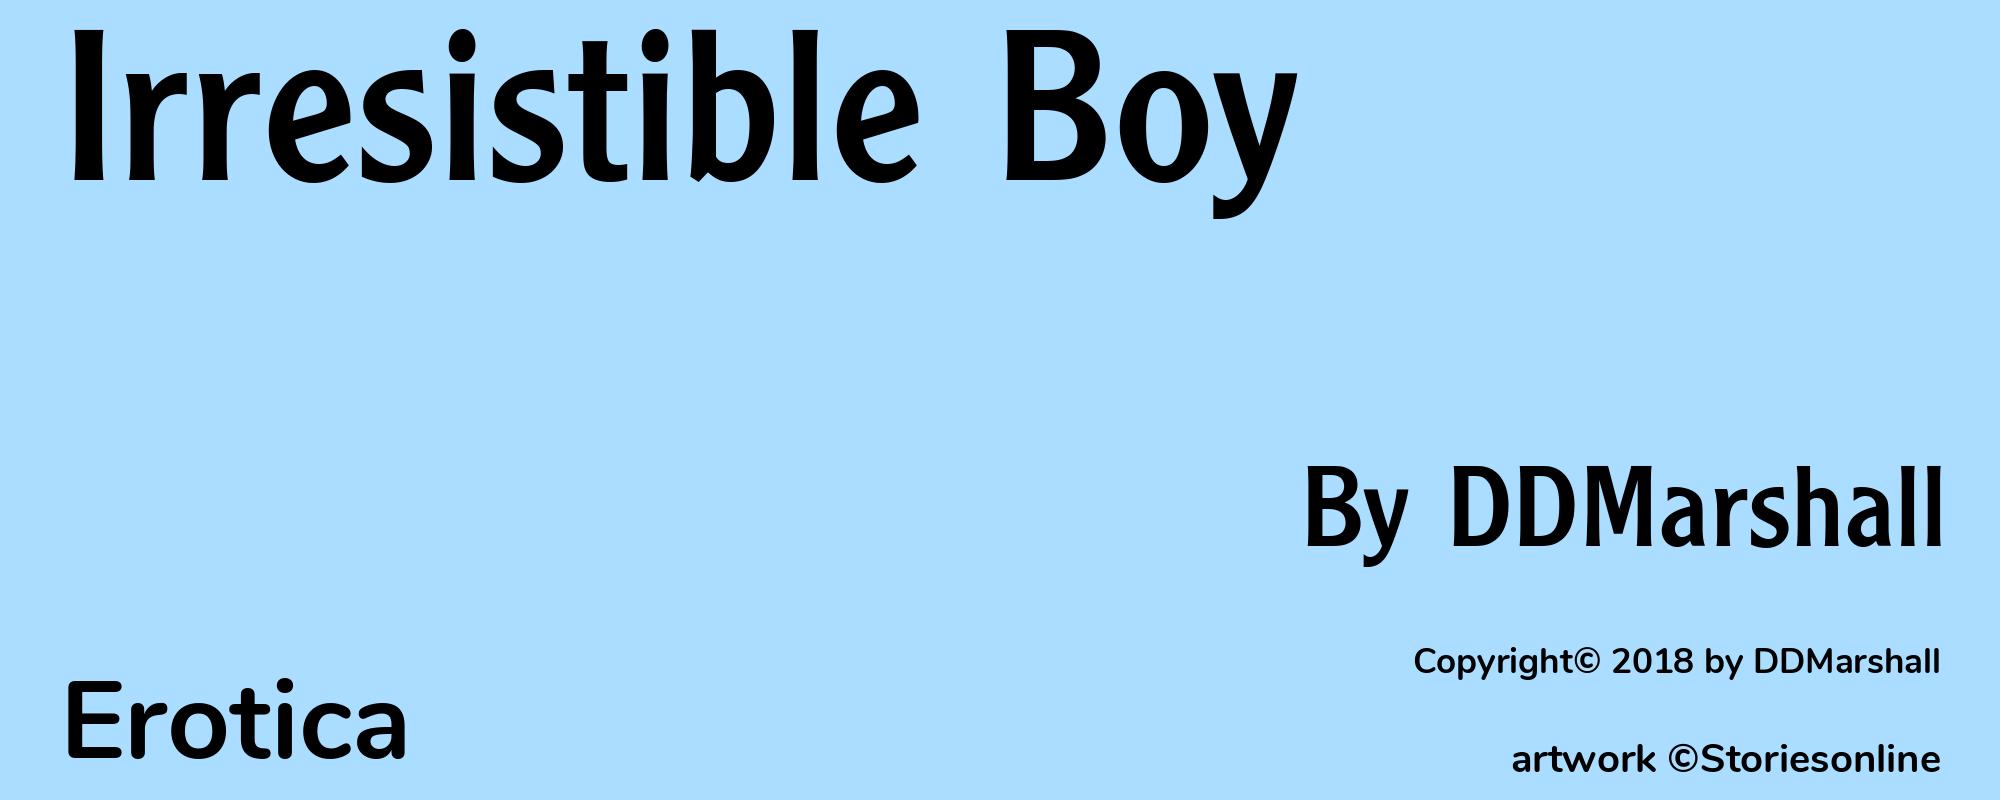 Irresistible Boy - Cover